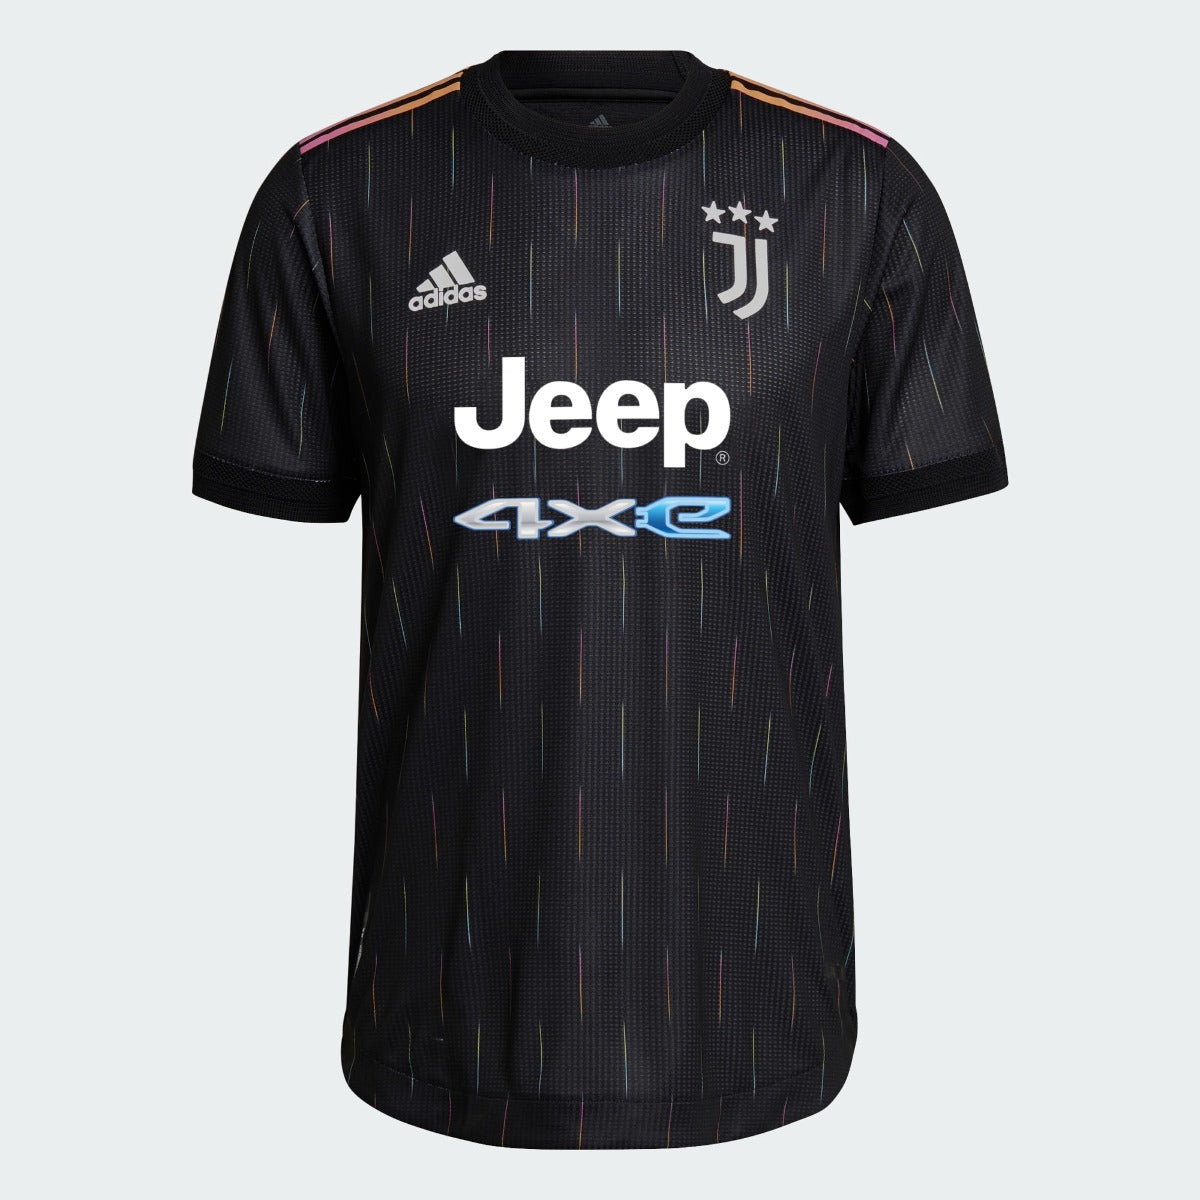 Adidas 2021-22 Juventus Authentic Away Jersey - Black (Front)